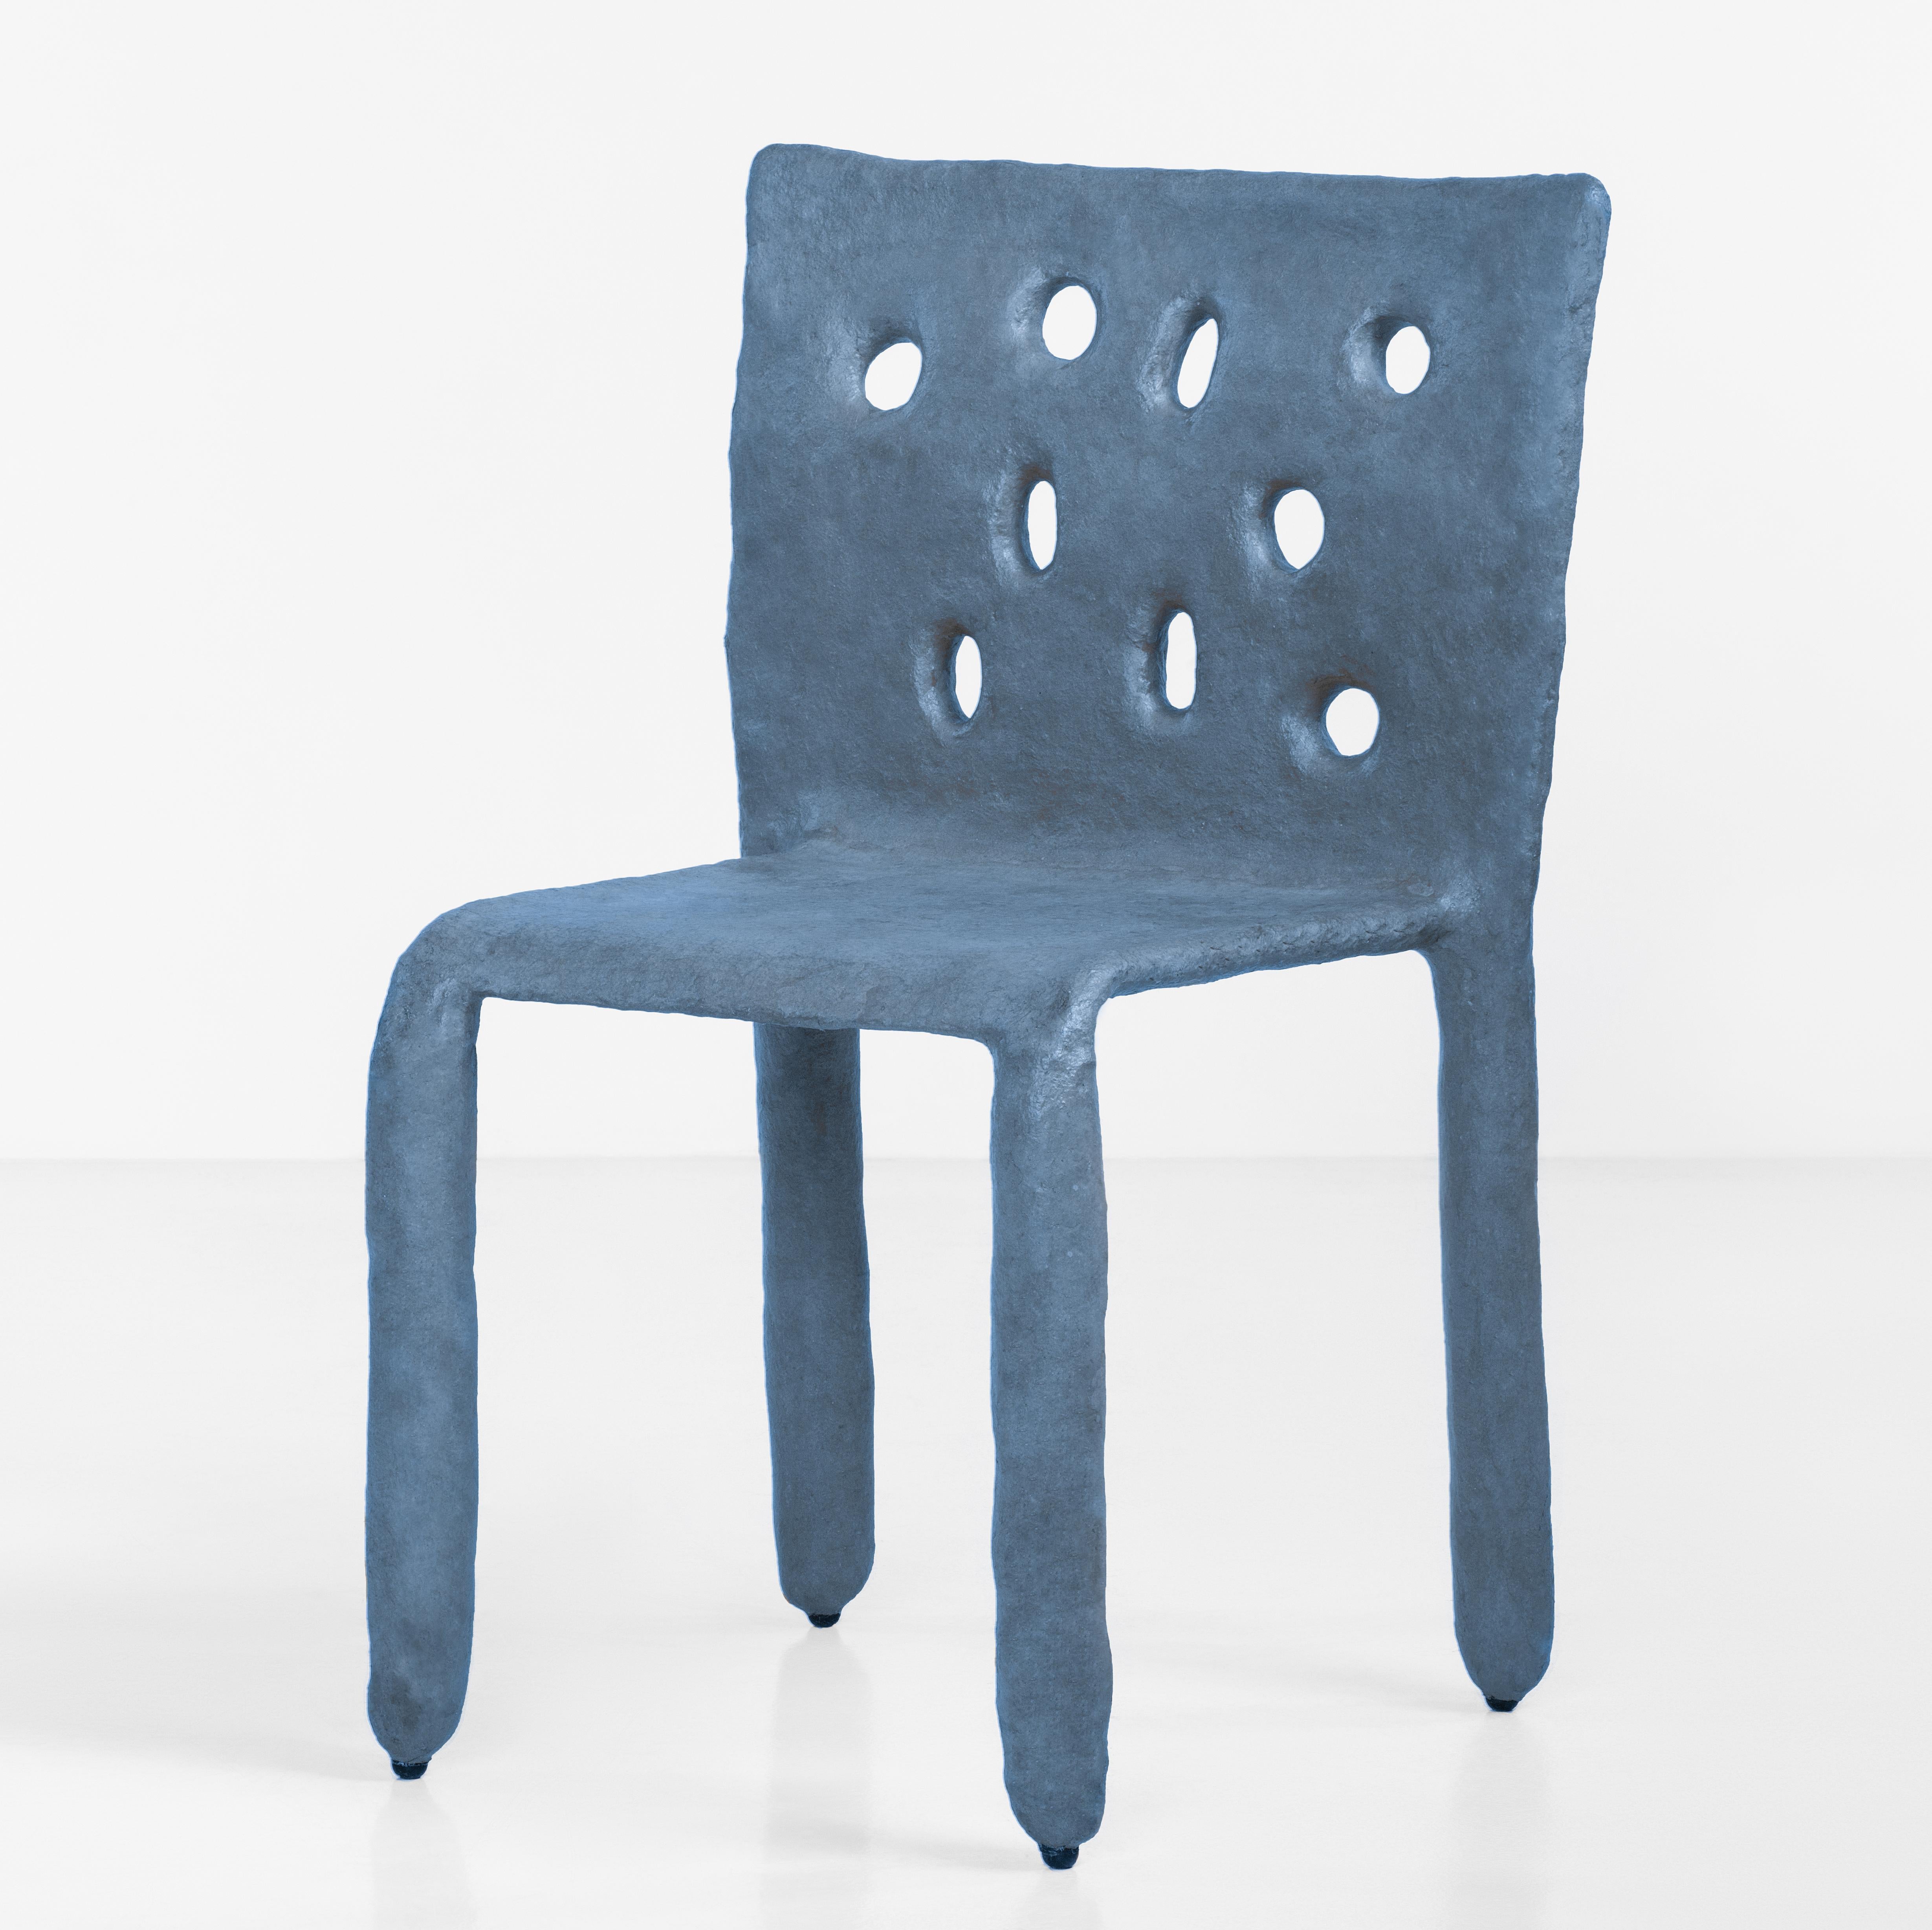 Orange Sculpted Contemporary Chair by FAINA 7